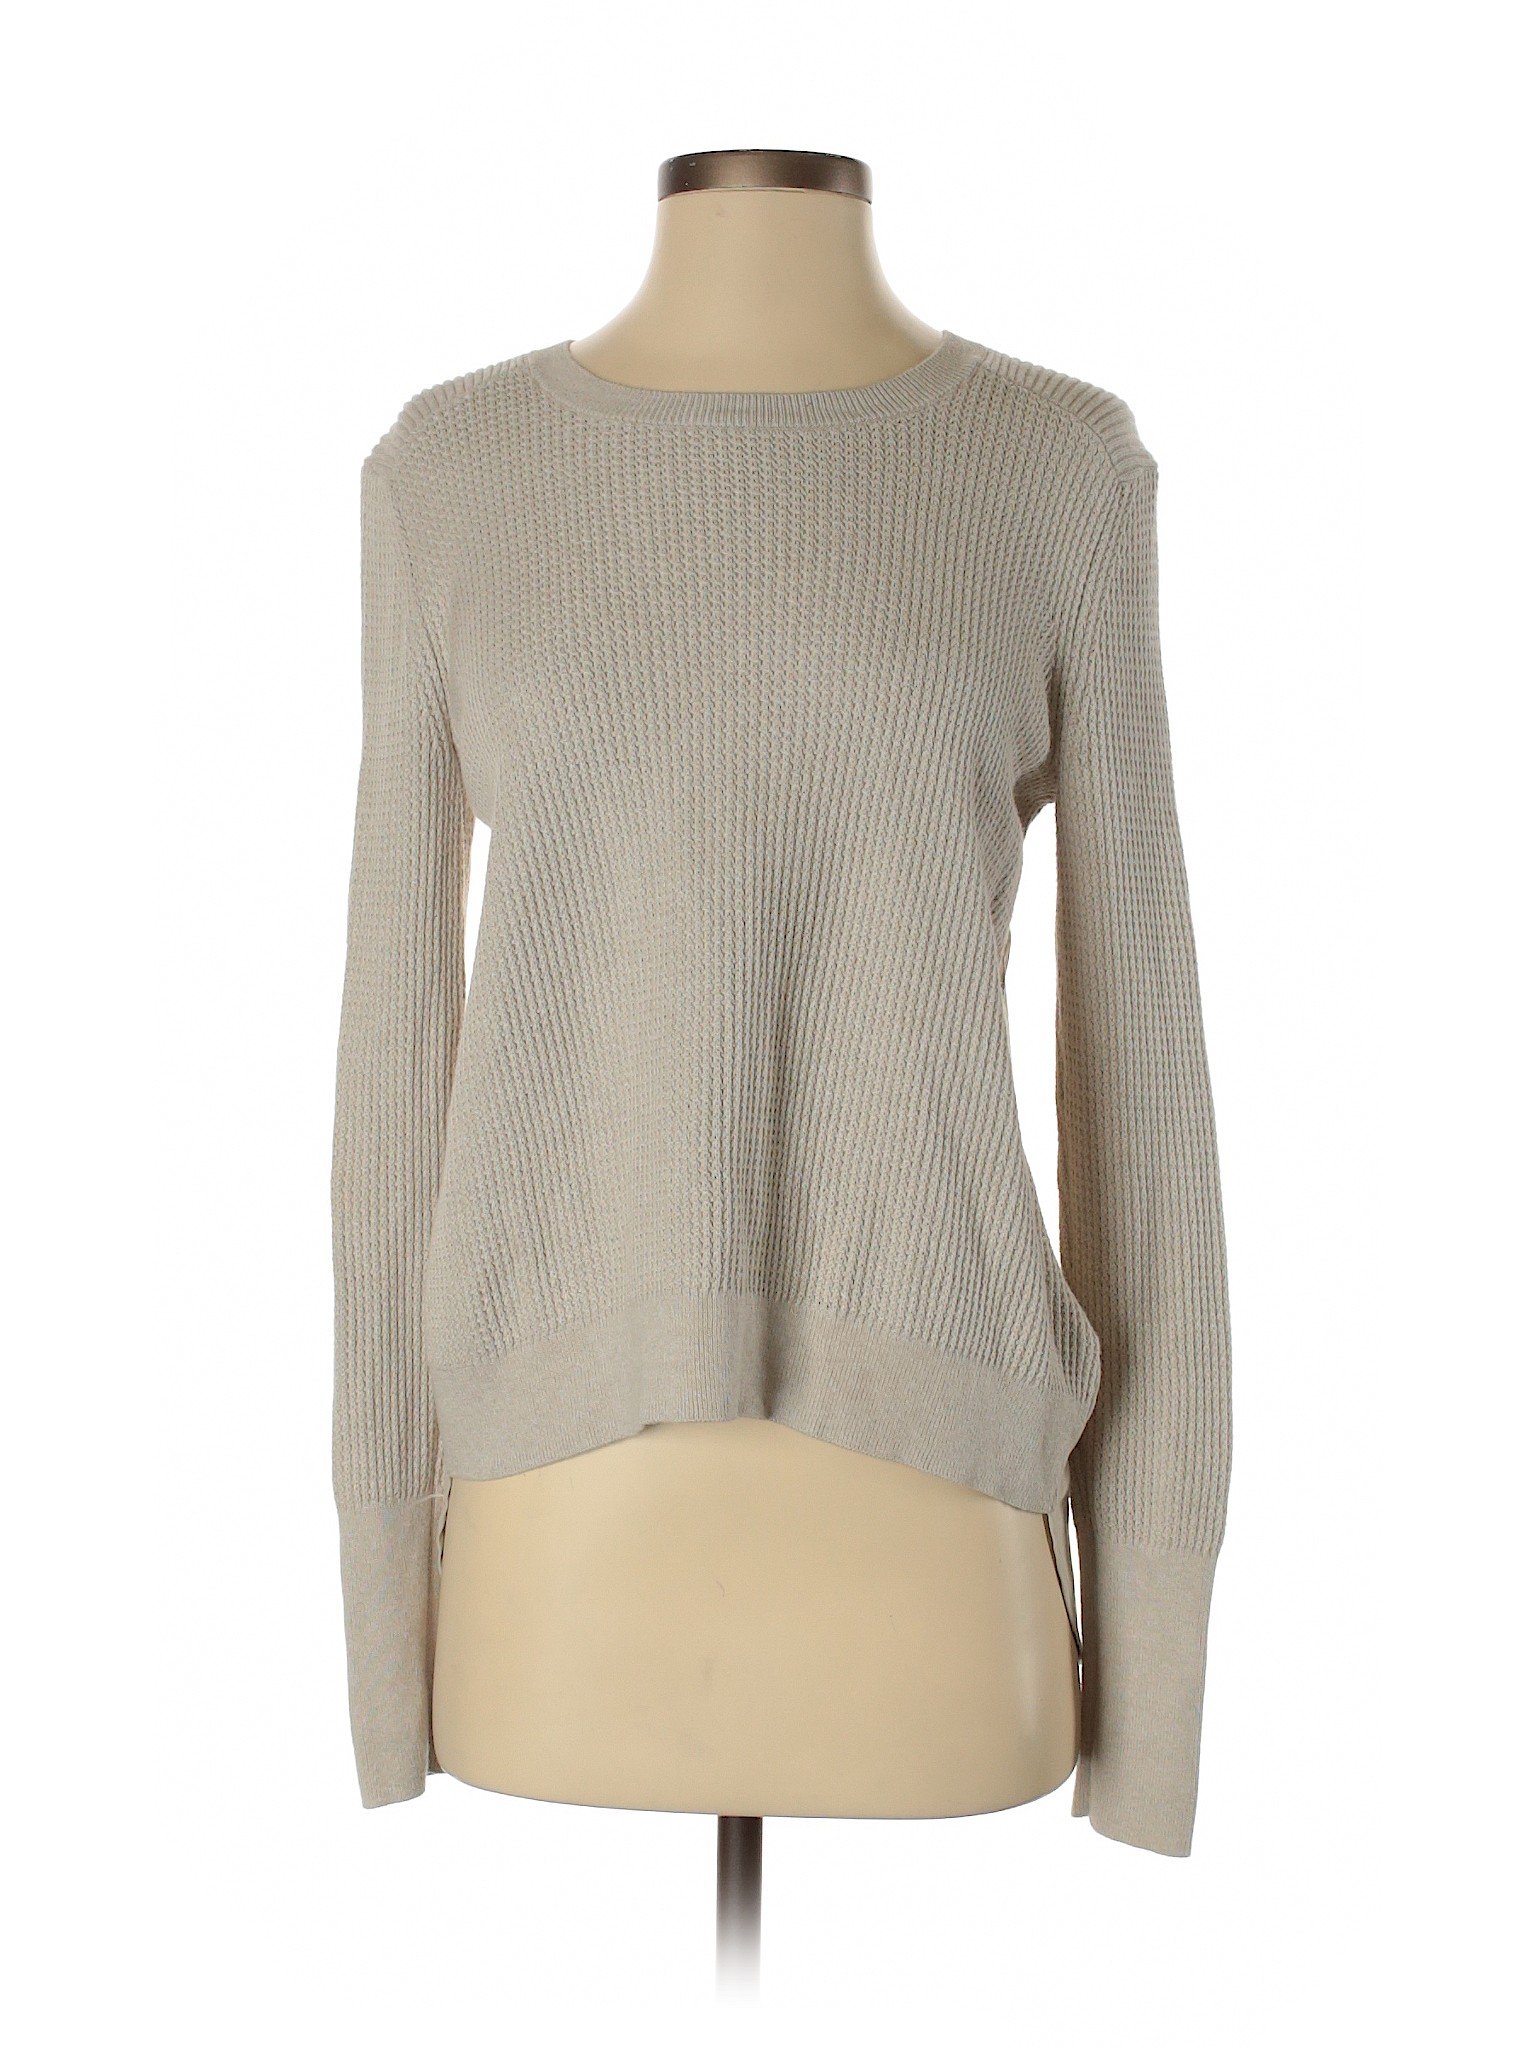 Banana Republic Women Brown Pullover Sweater XS | eBay